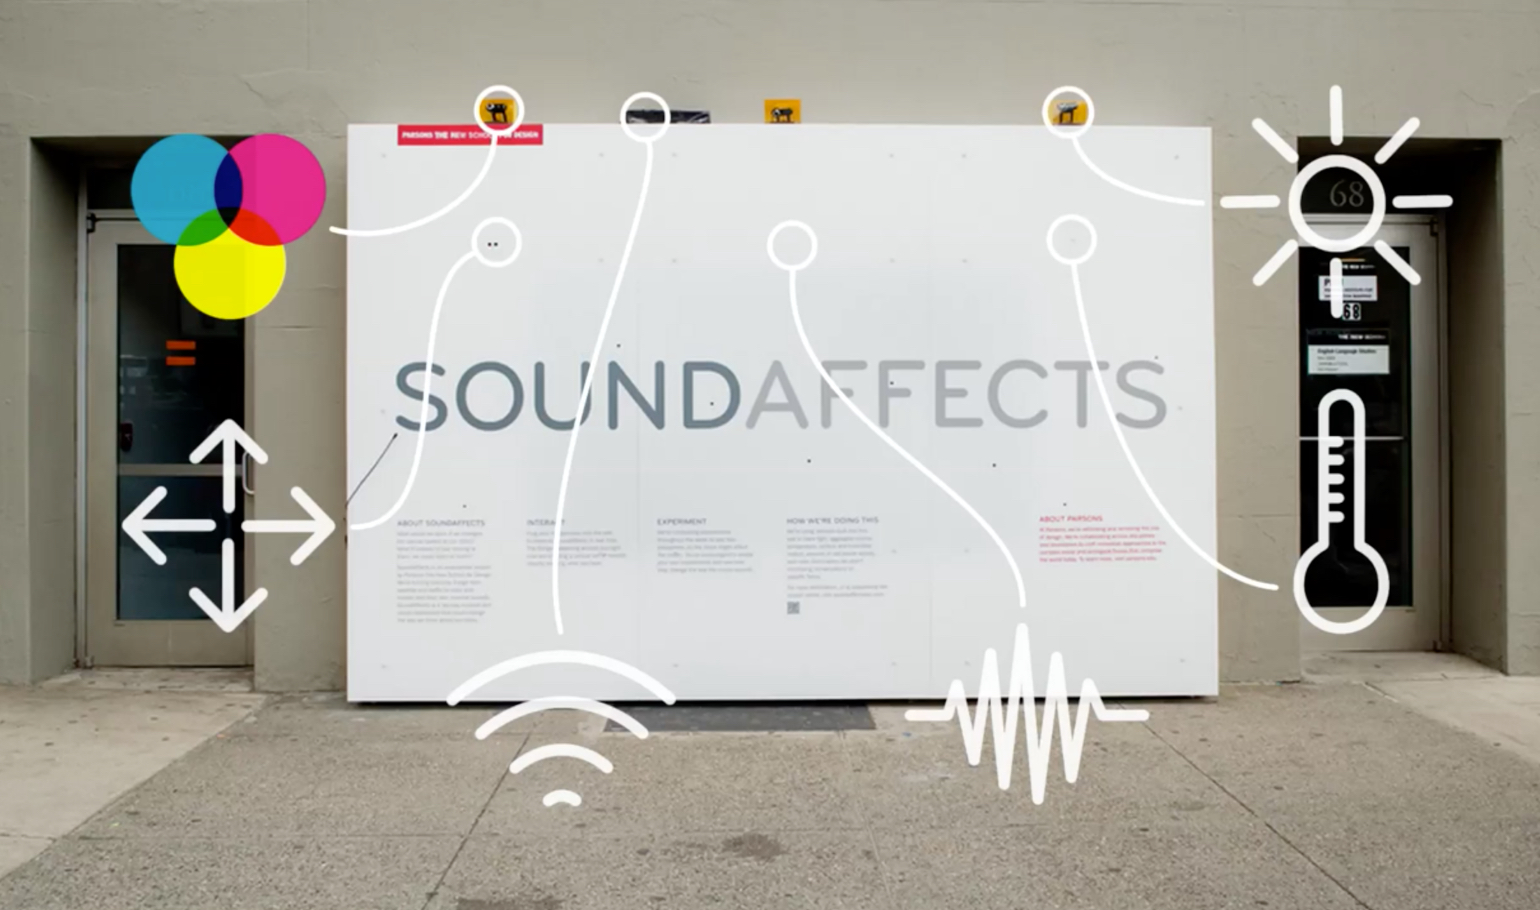 sound-affects-2@2x